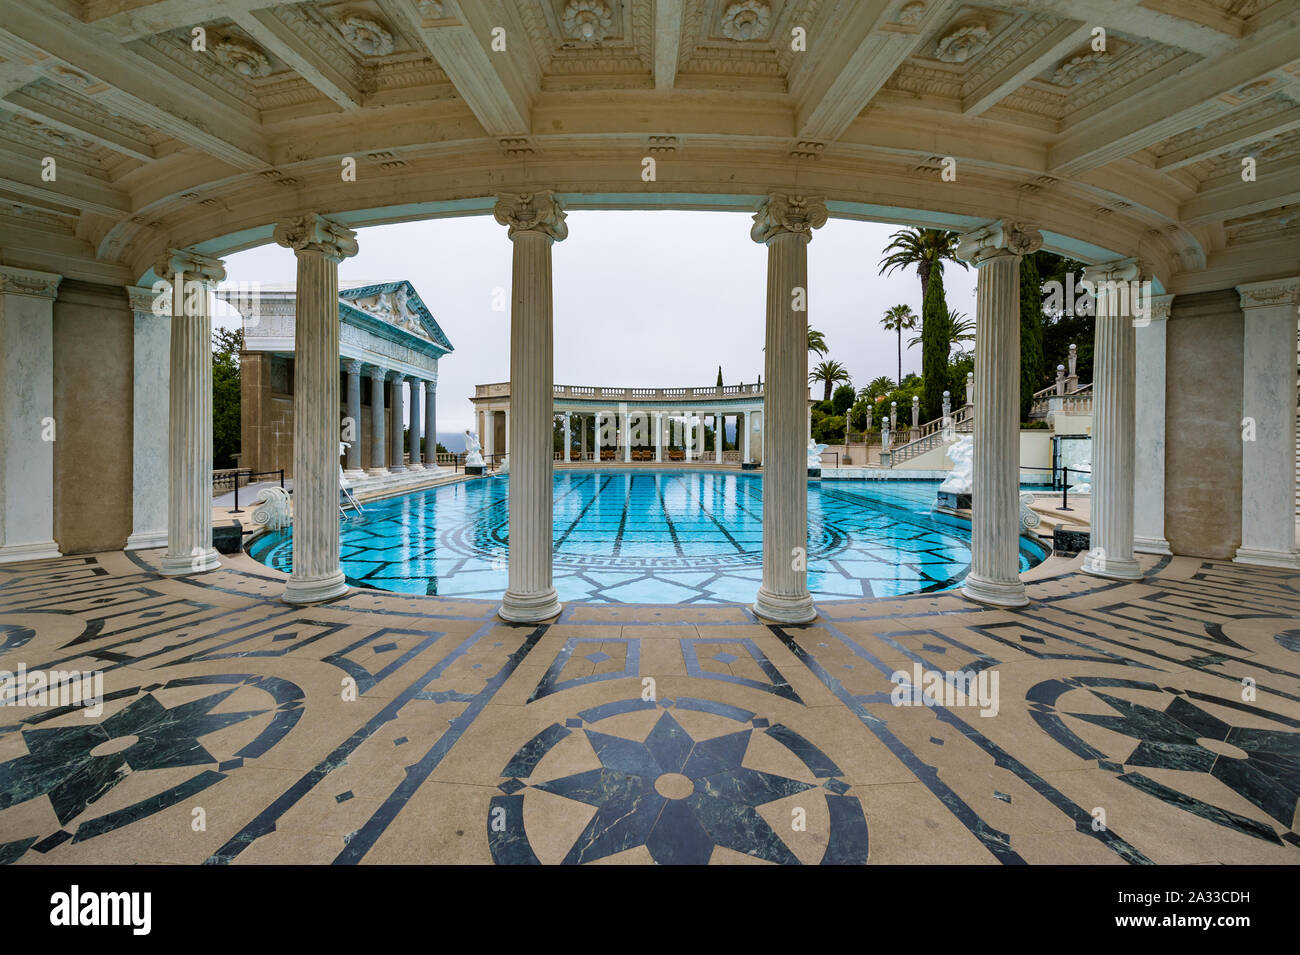 California, USA, 09 Jun 2013: Grand, luxurious swimming pool in Hearst Castle. Stock Photo